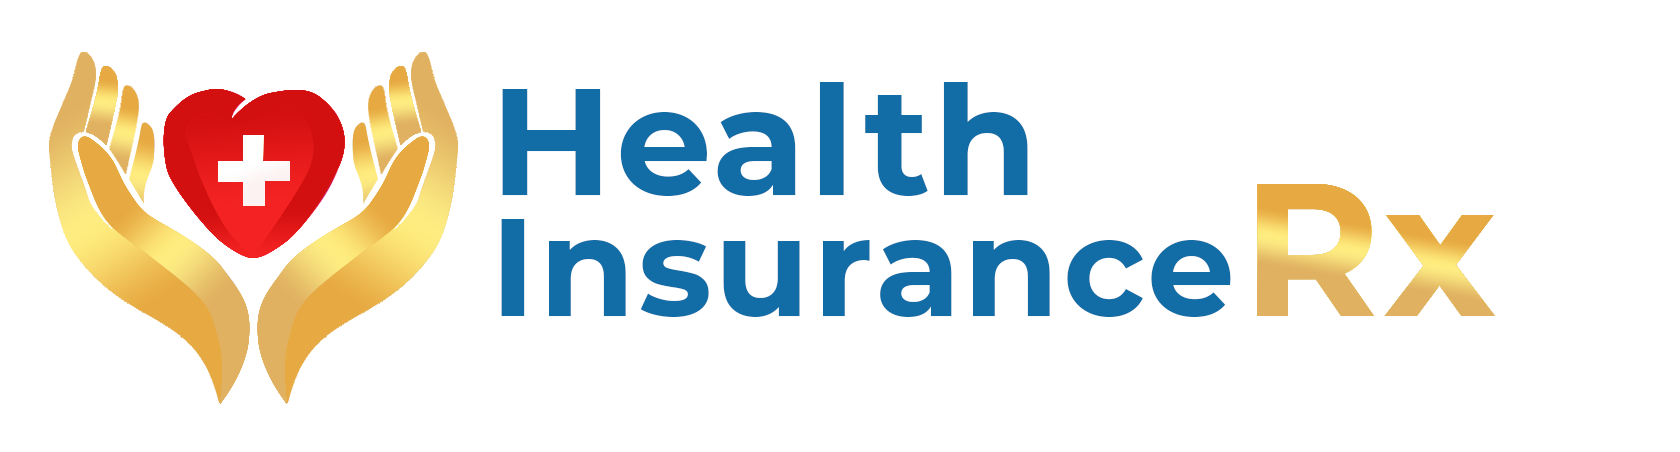 Health Insurance RX